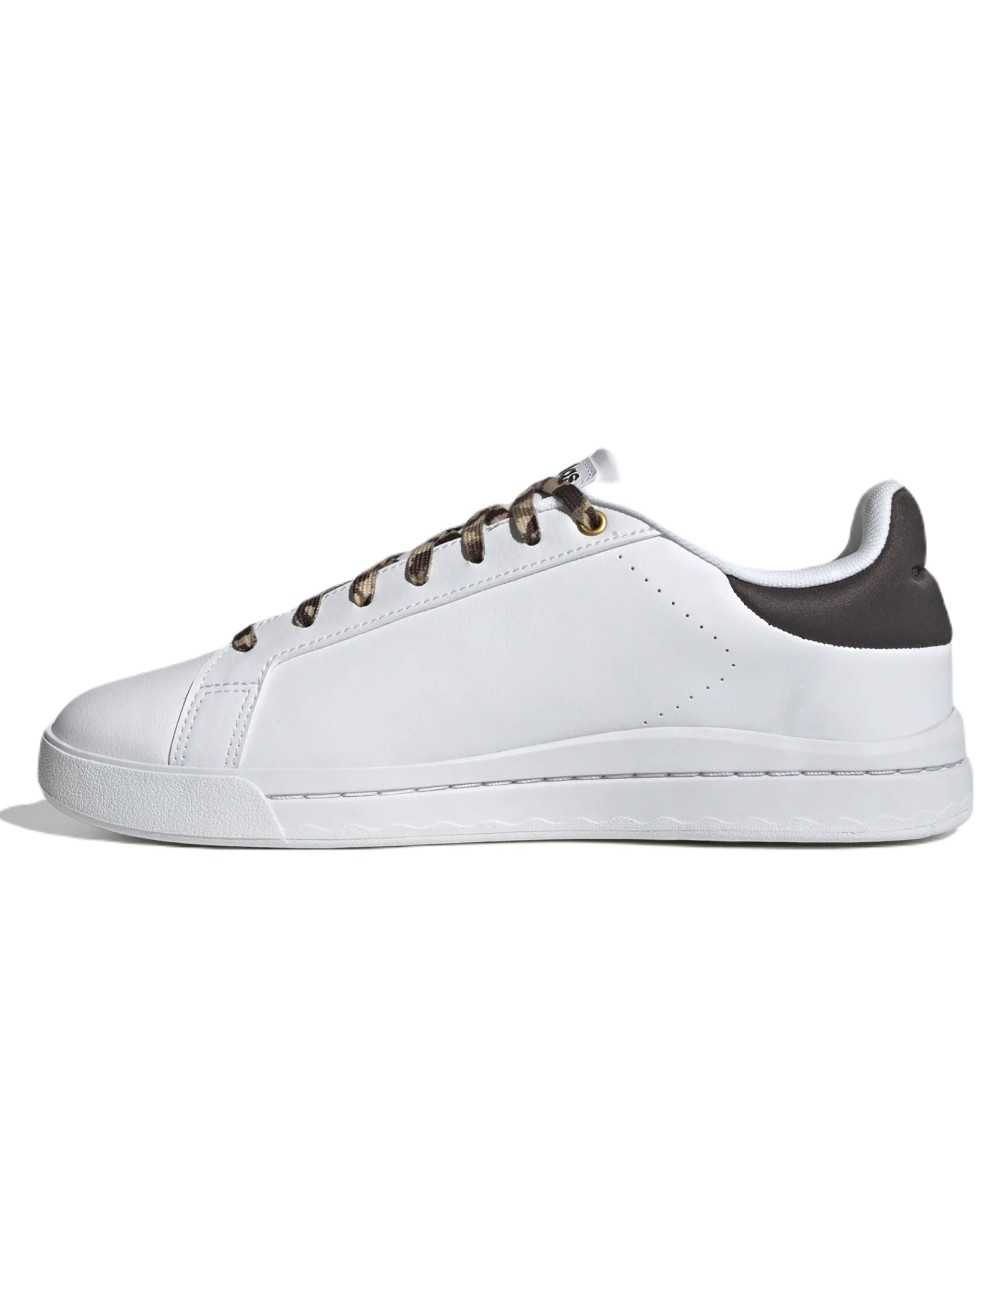 Adidas Court Silk scarpe donna basse white gold similpelle - Scarpe Donna Sportive